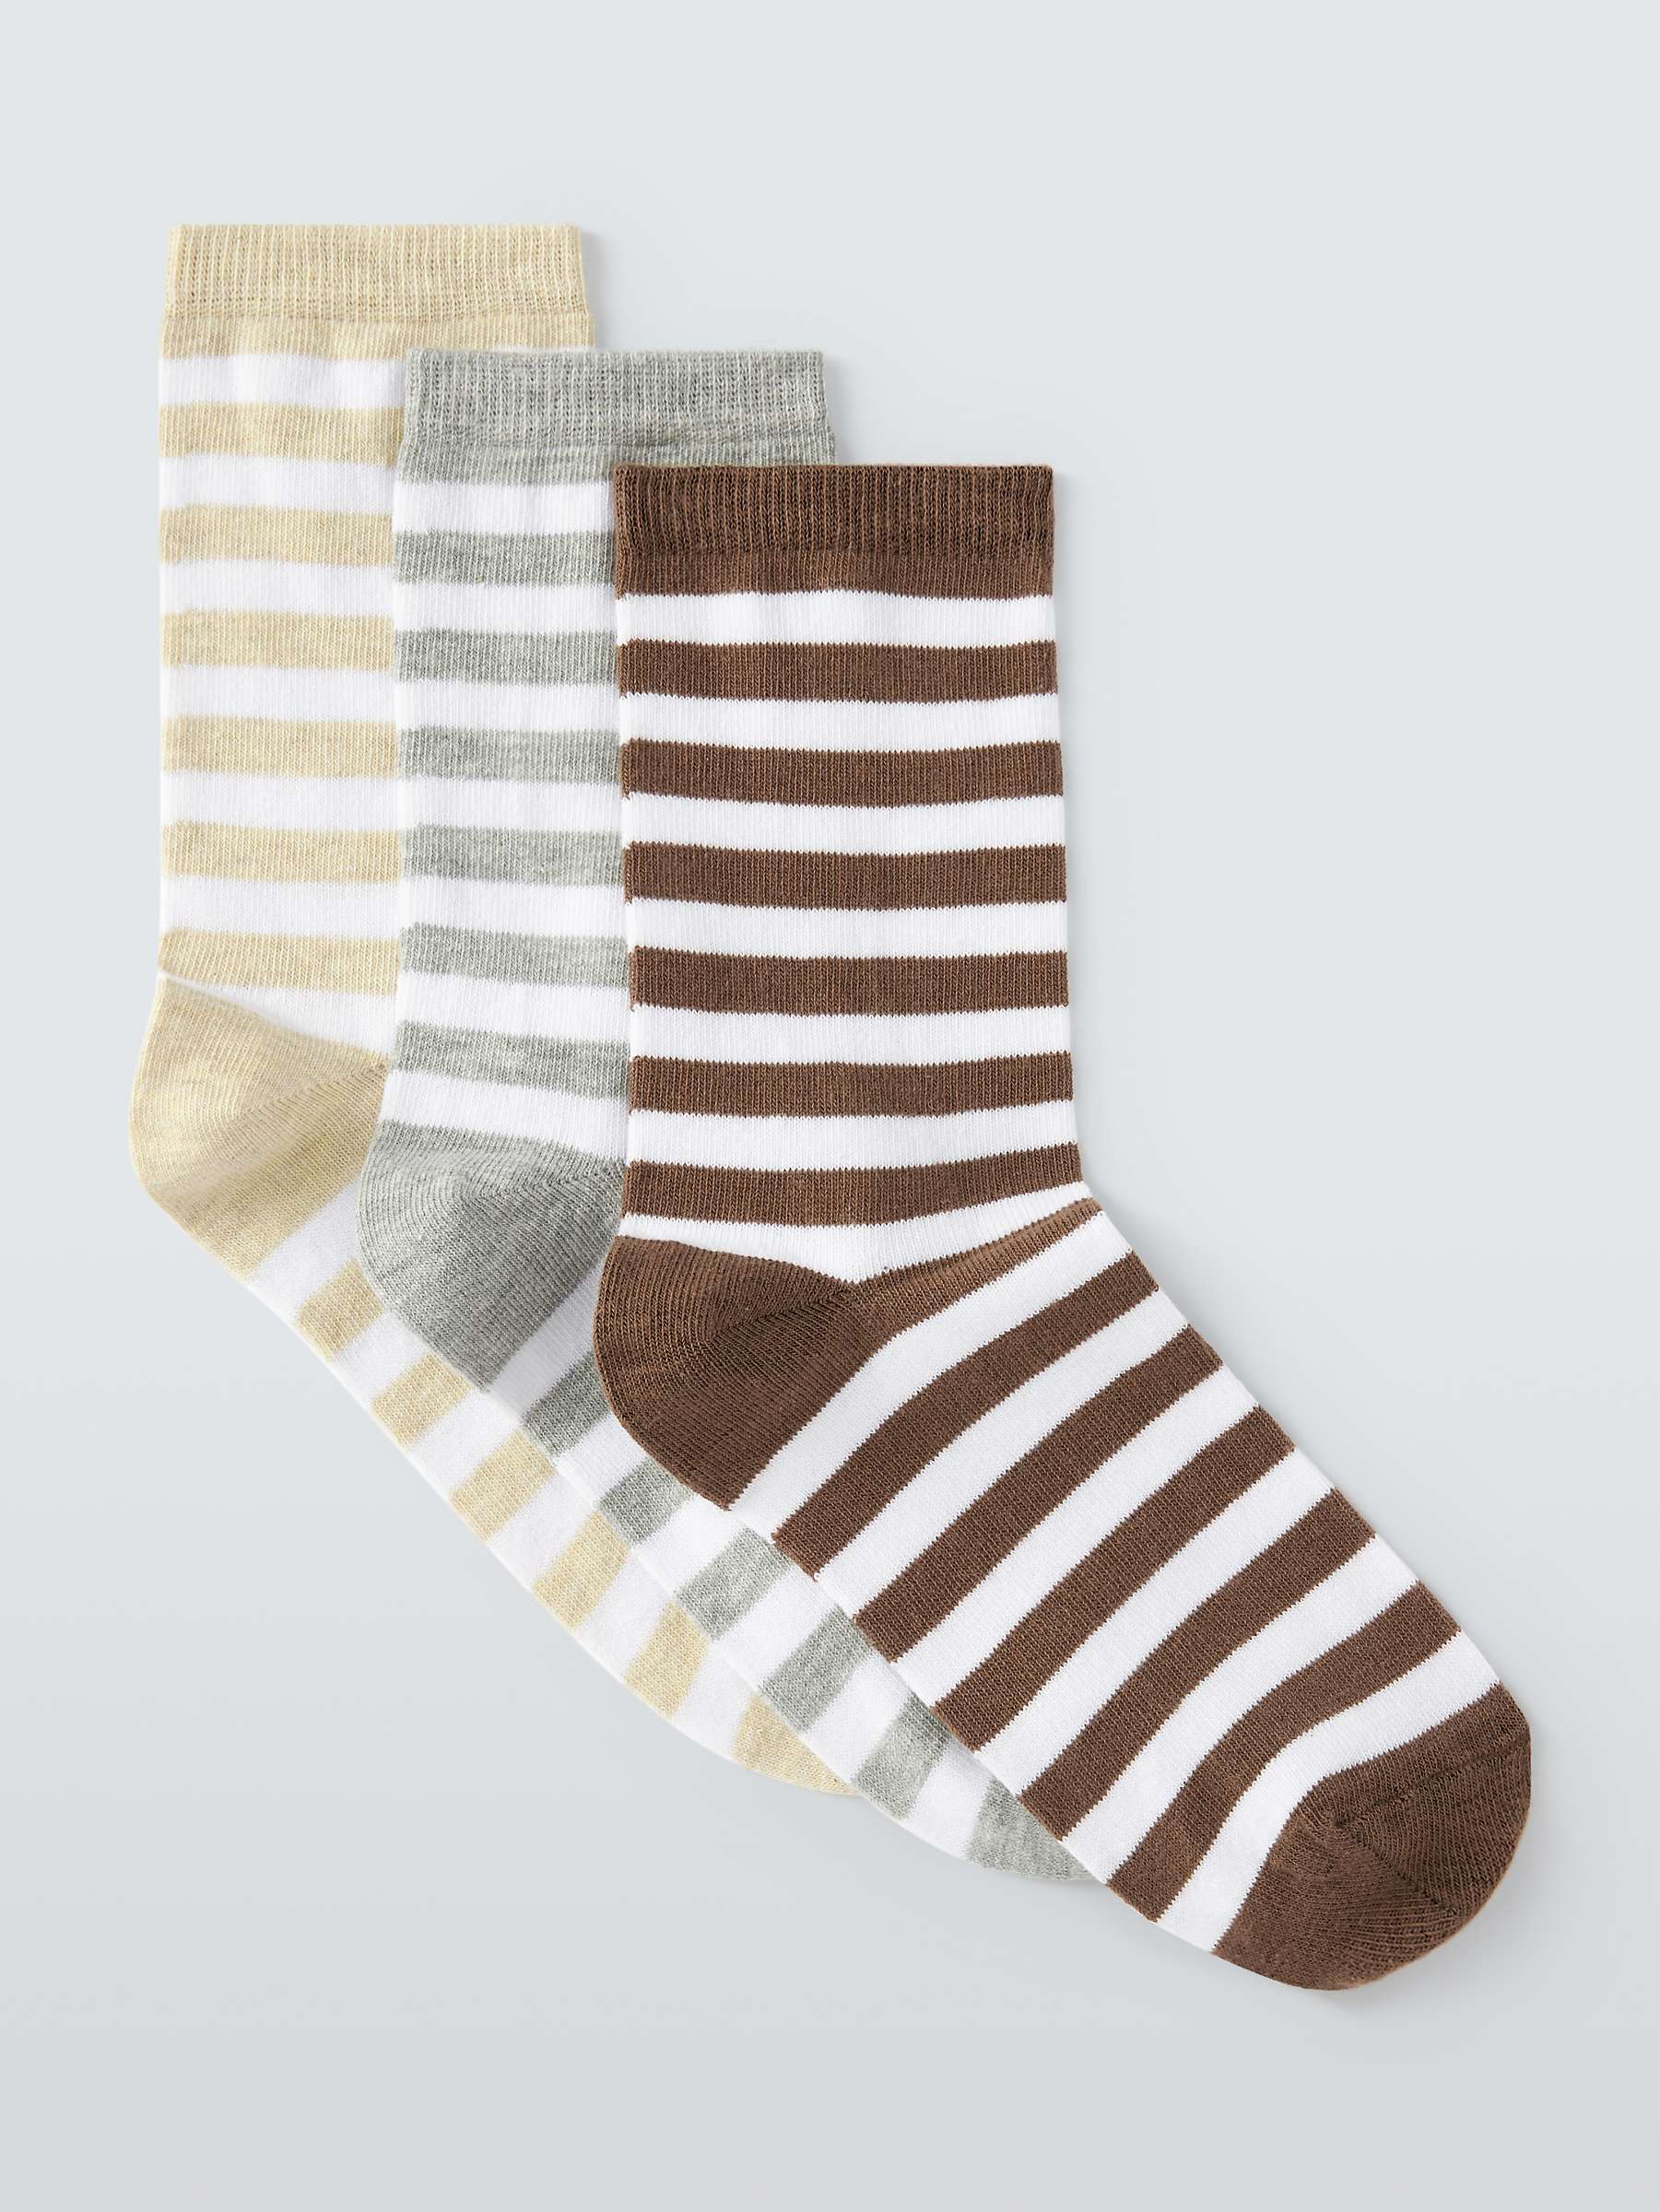 Buy John Lewis Striped Ankle Socks, Pack of 3, Natural/Multi Online at johnlewis.com